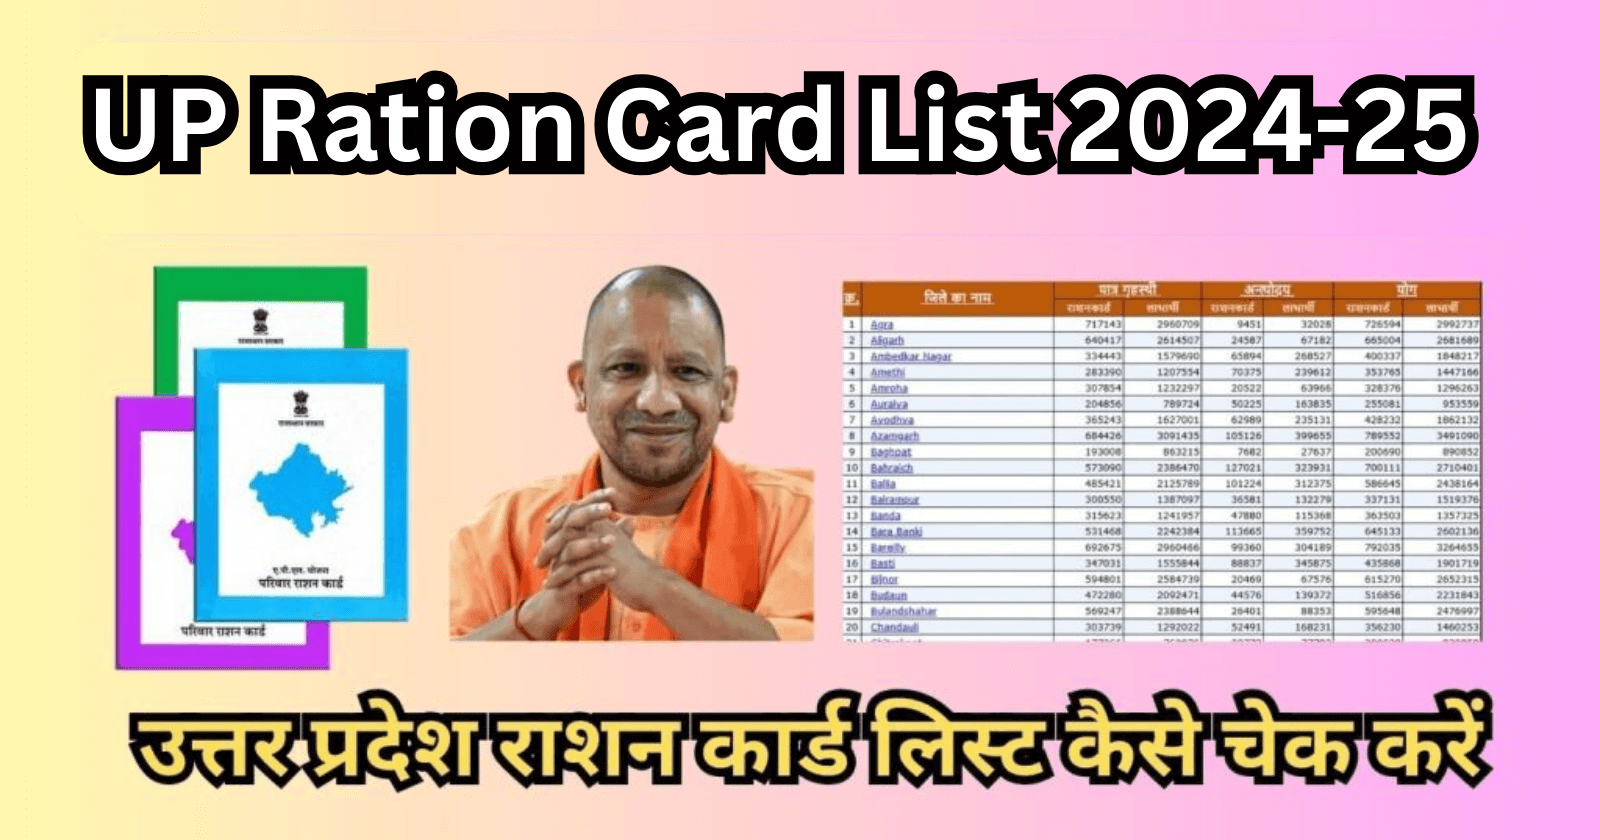 UP Ration Card List 2024-25